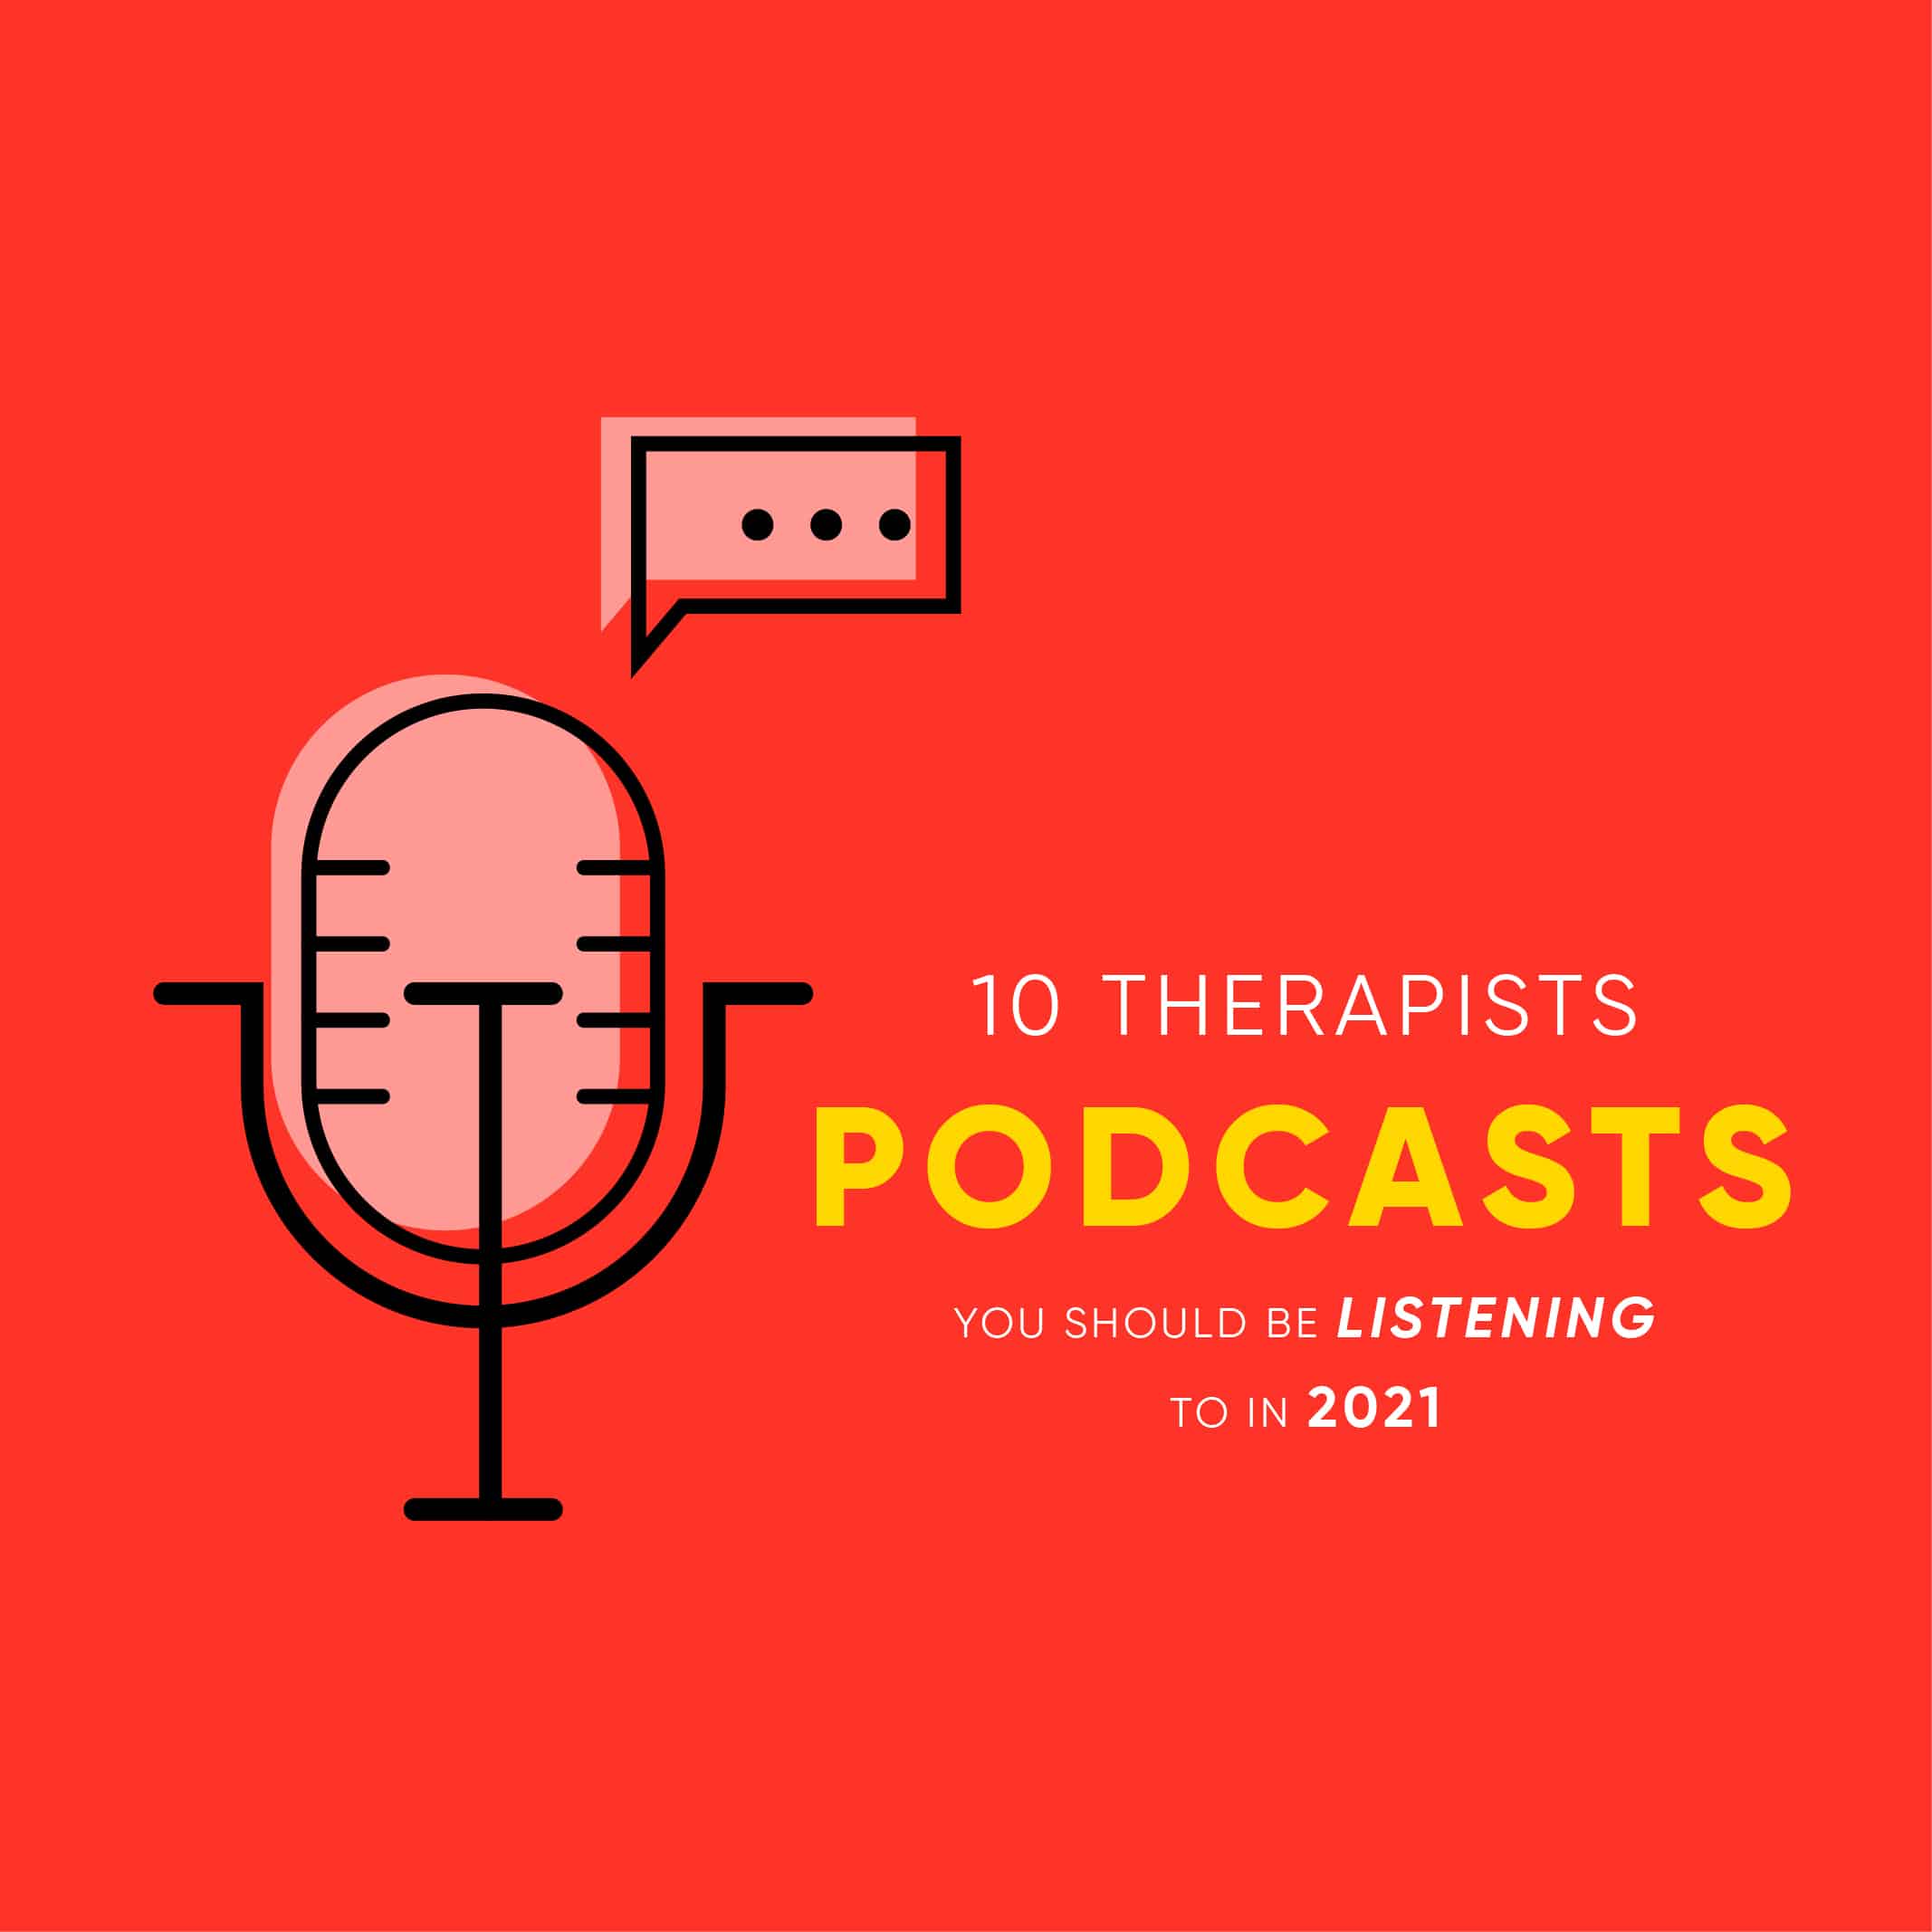 10 therapists podcast